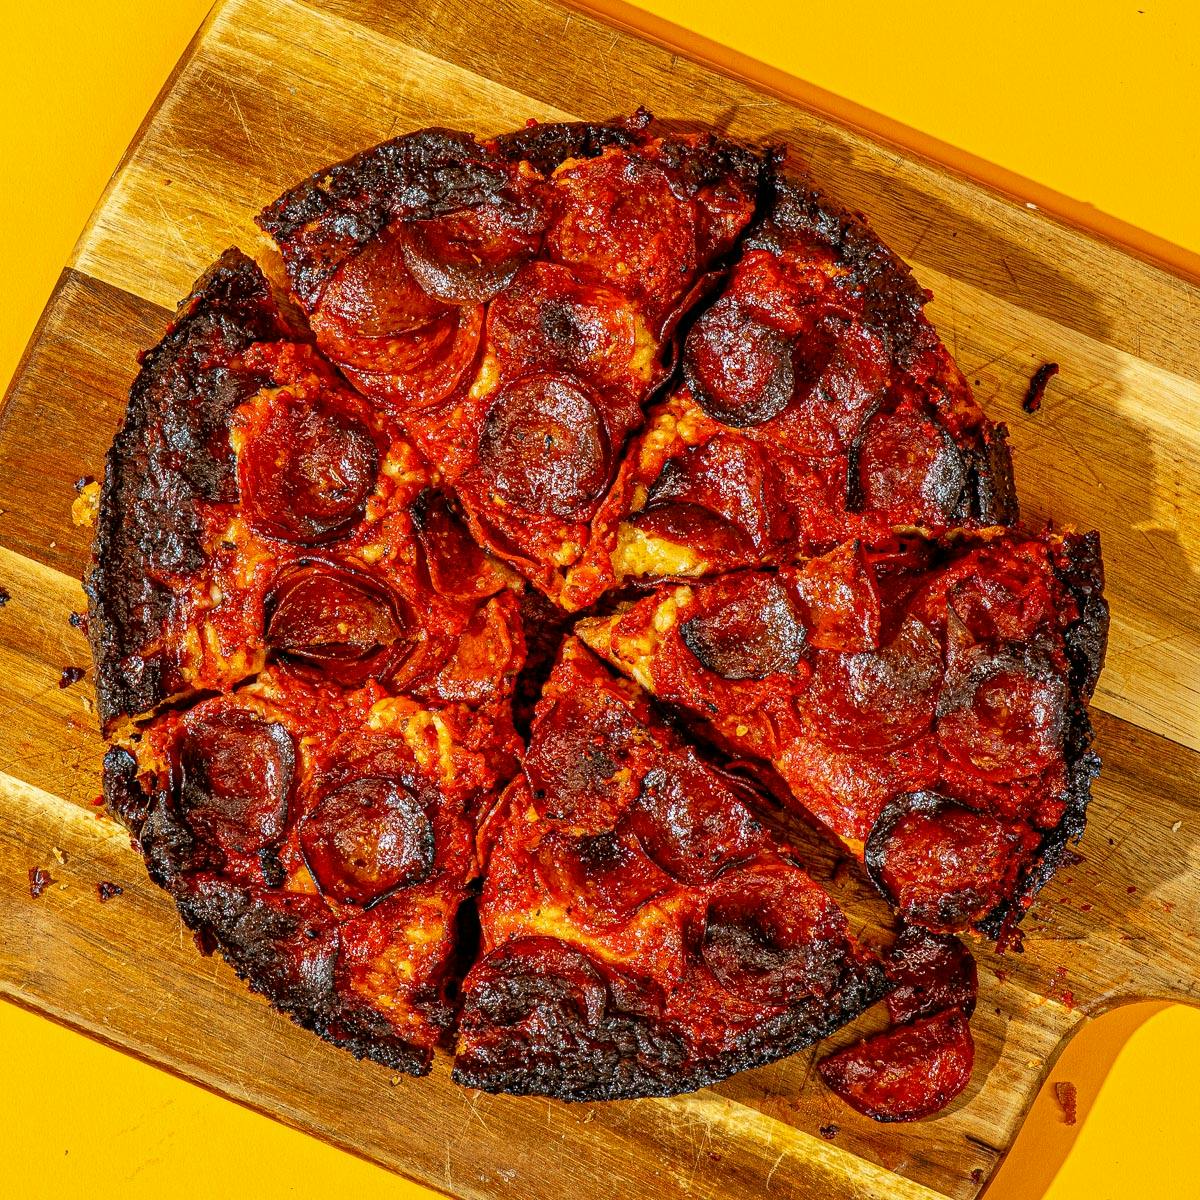 DIY Outdoor Pizza Oven - How To Build & More - Pequod's Pizza